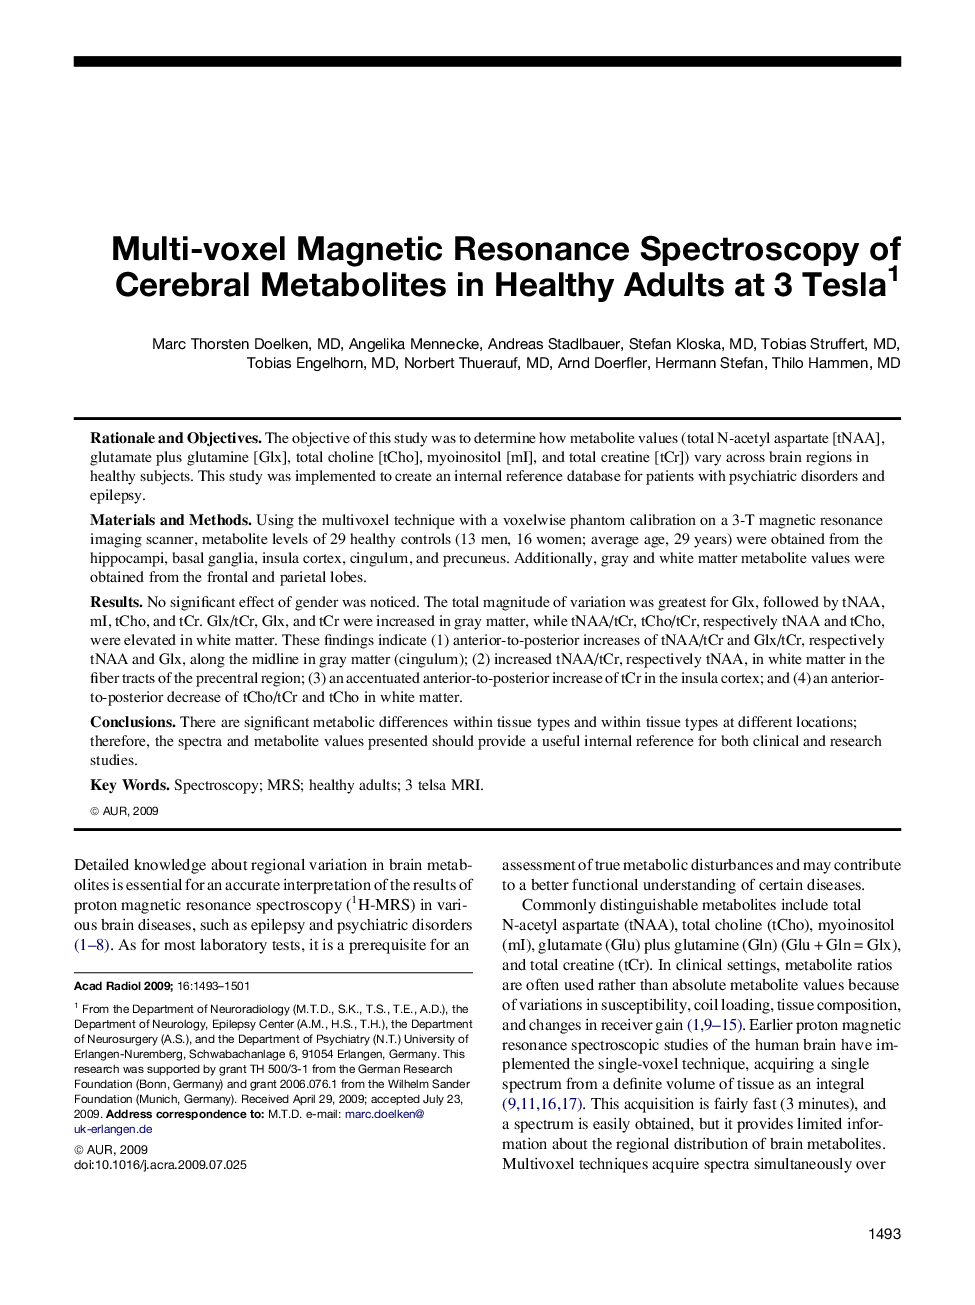 Multi-voxel Magnetic Resonance Spectroscopy of Cerebral Metabolites in Healthy Adults at 3 Tesla